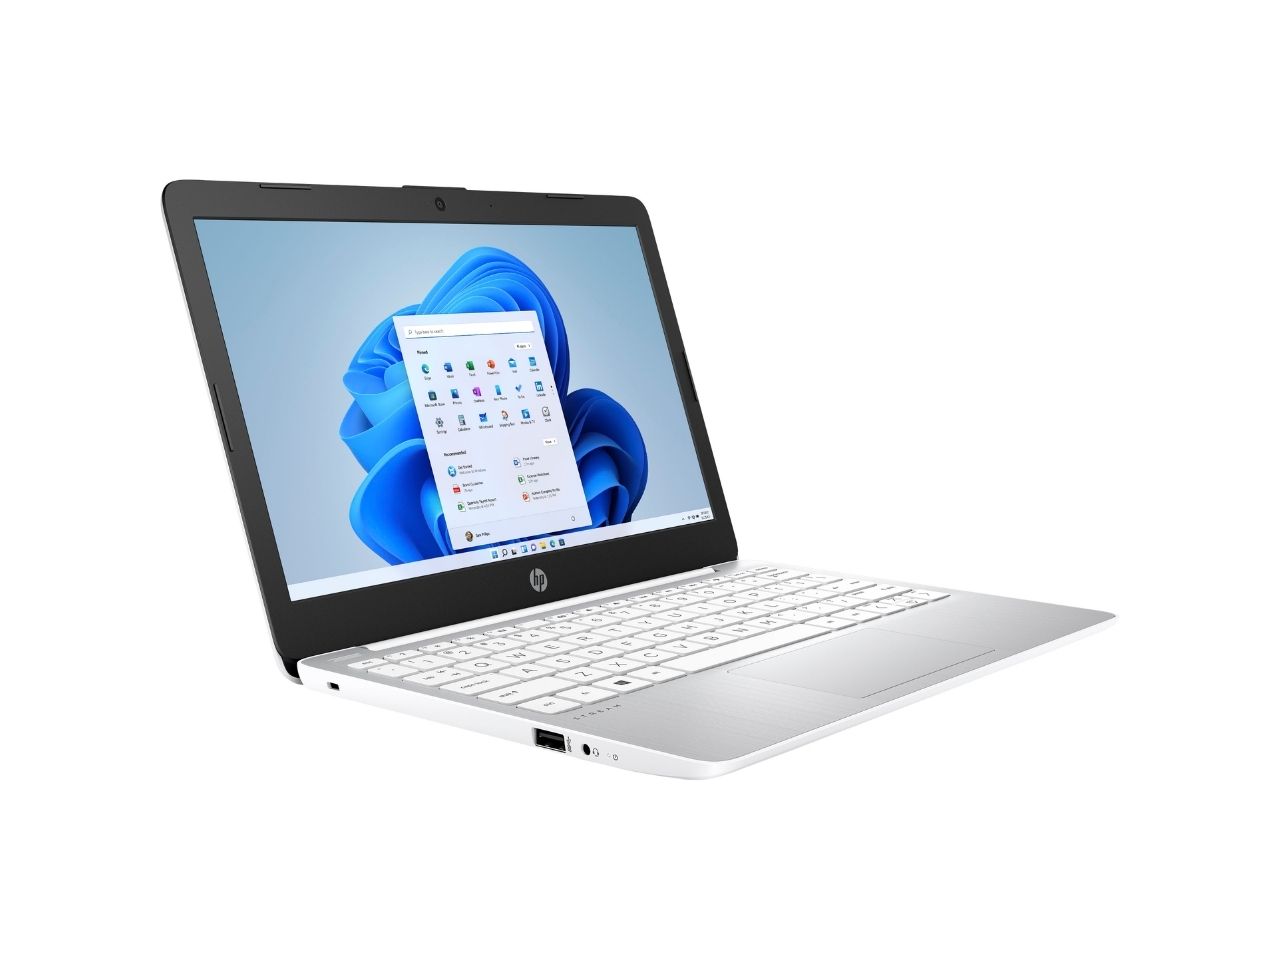 HP Stream 11.6-inch laptop on white background.